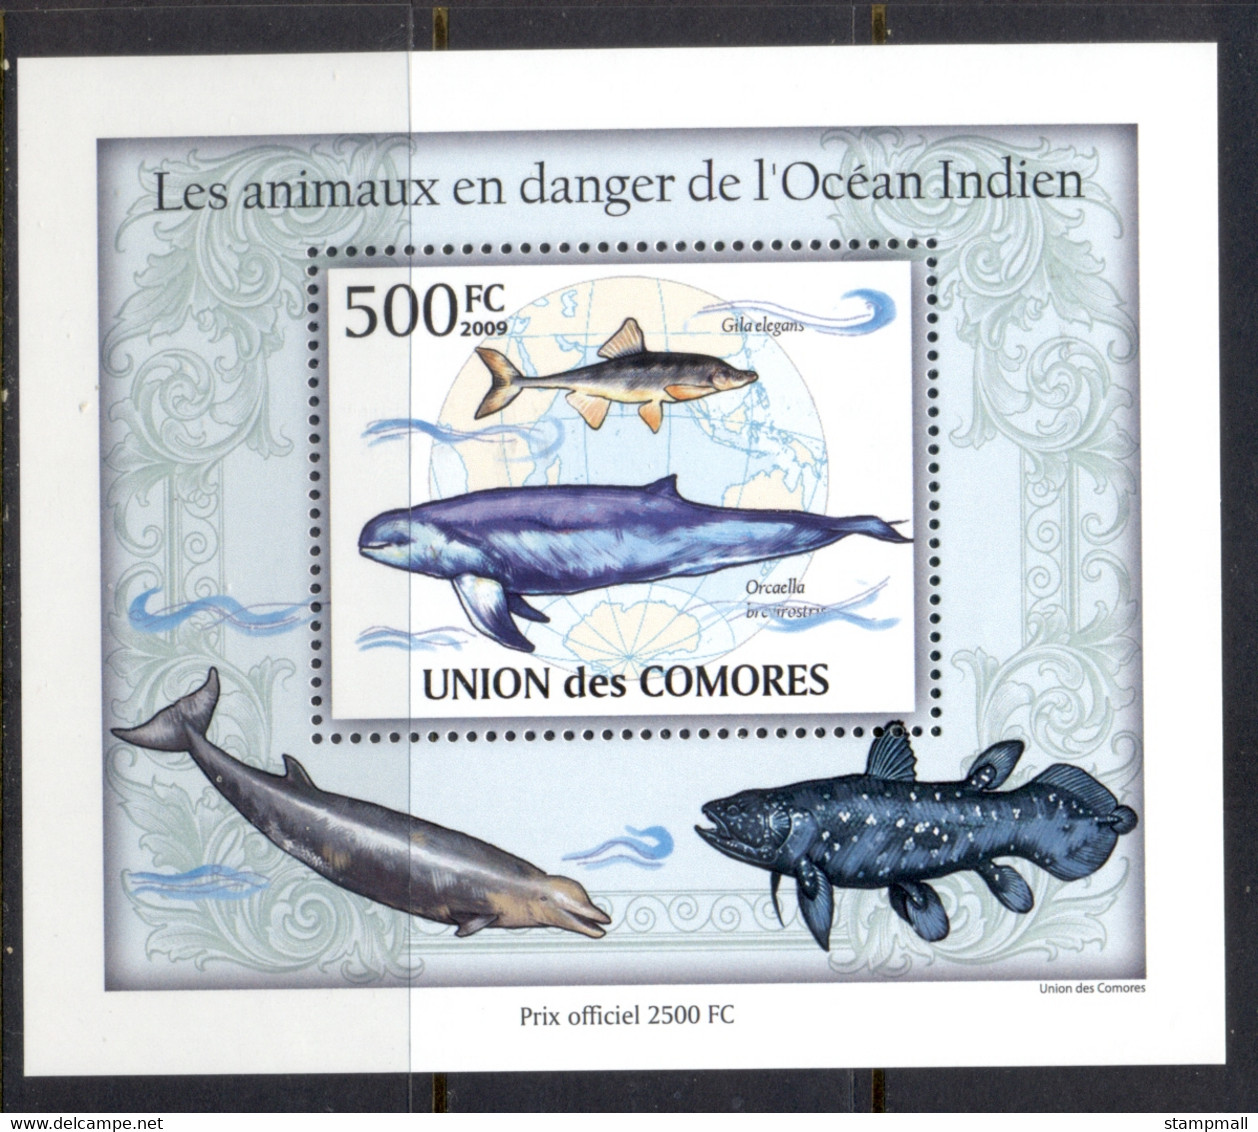 Comoro Is 2009 Endangered Animals In The Indian Ocean, Marine Life Deluxe MS MUH - Comores (1975-...)